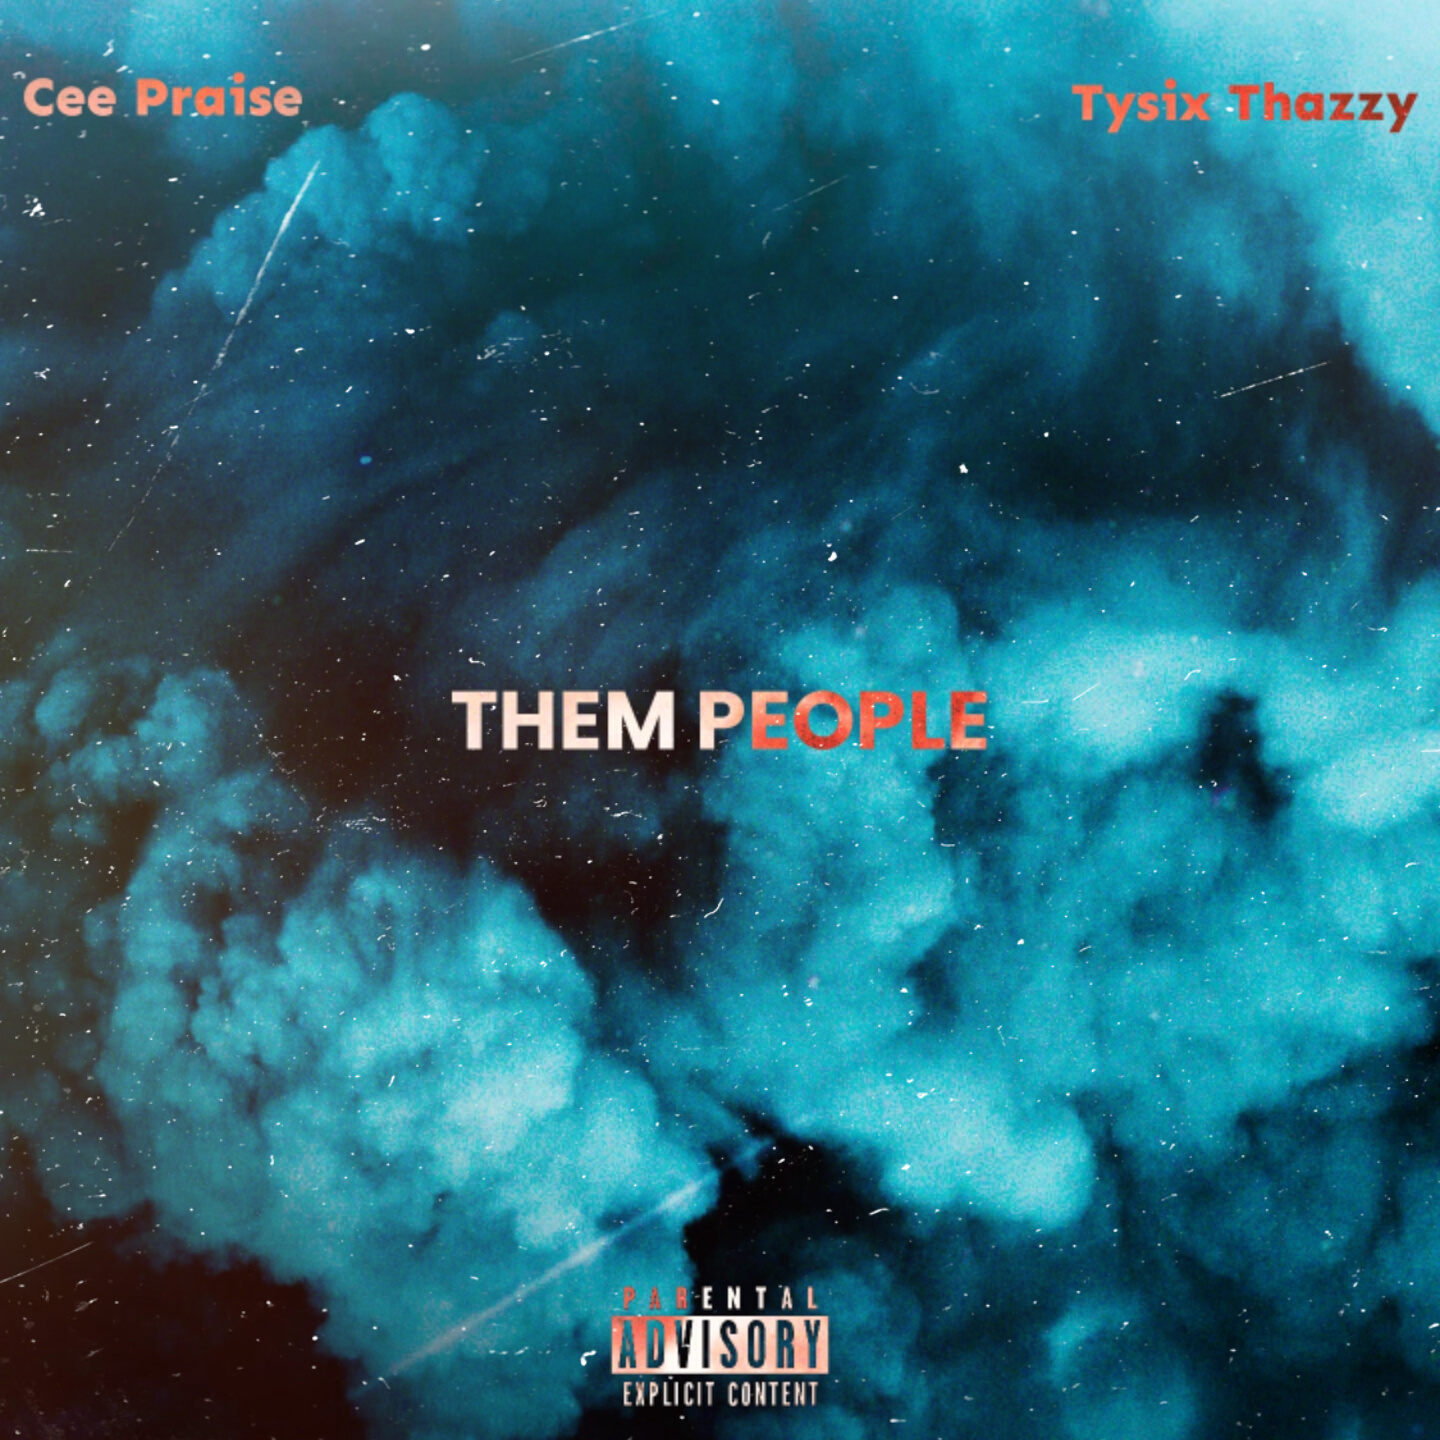 cee-praise-Them-people_ft.-Tysix-Thazzy_095721